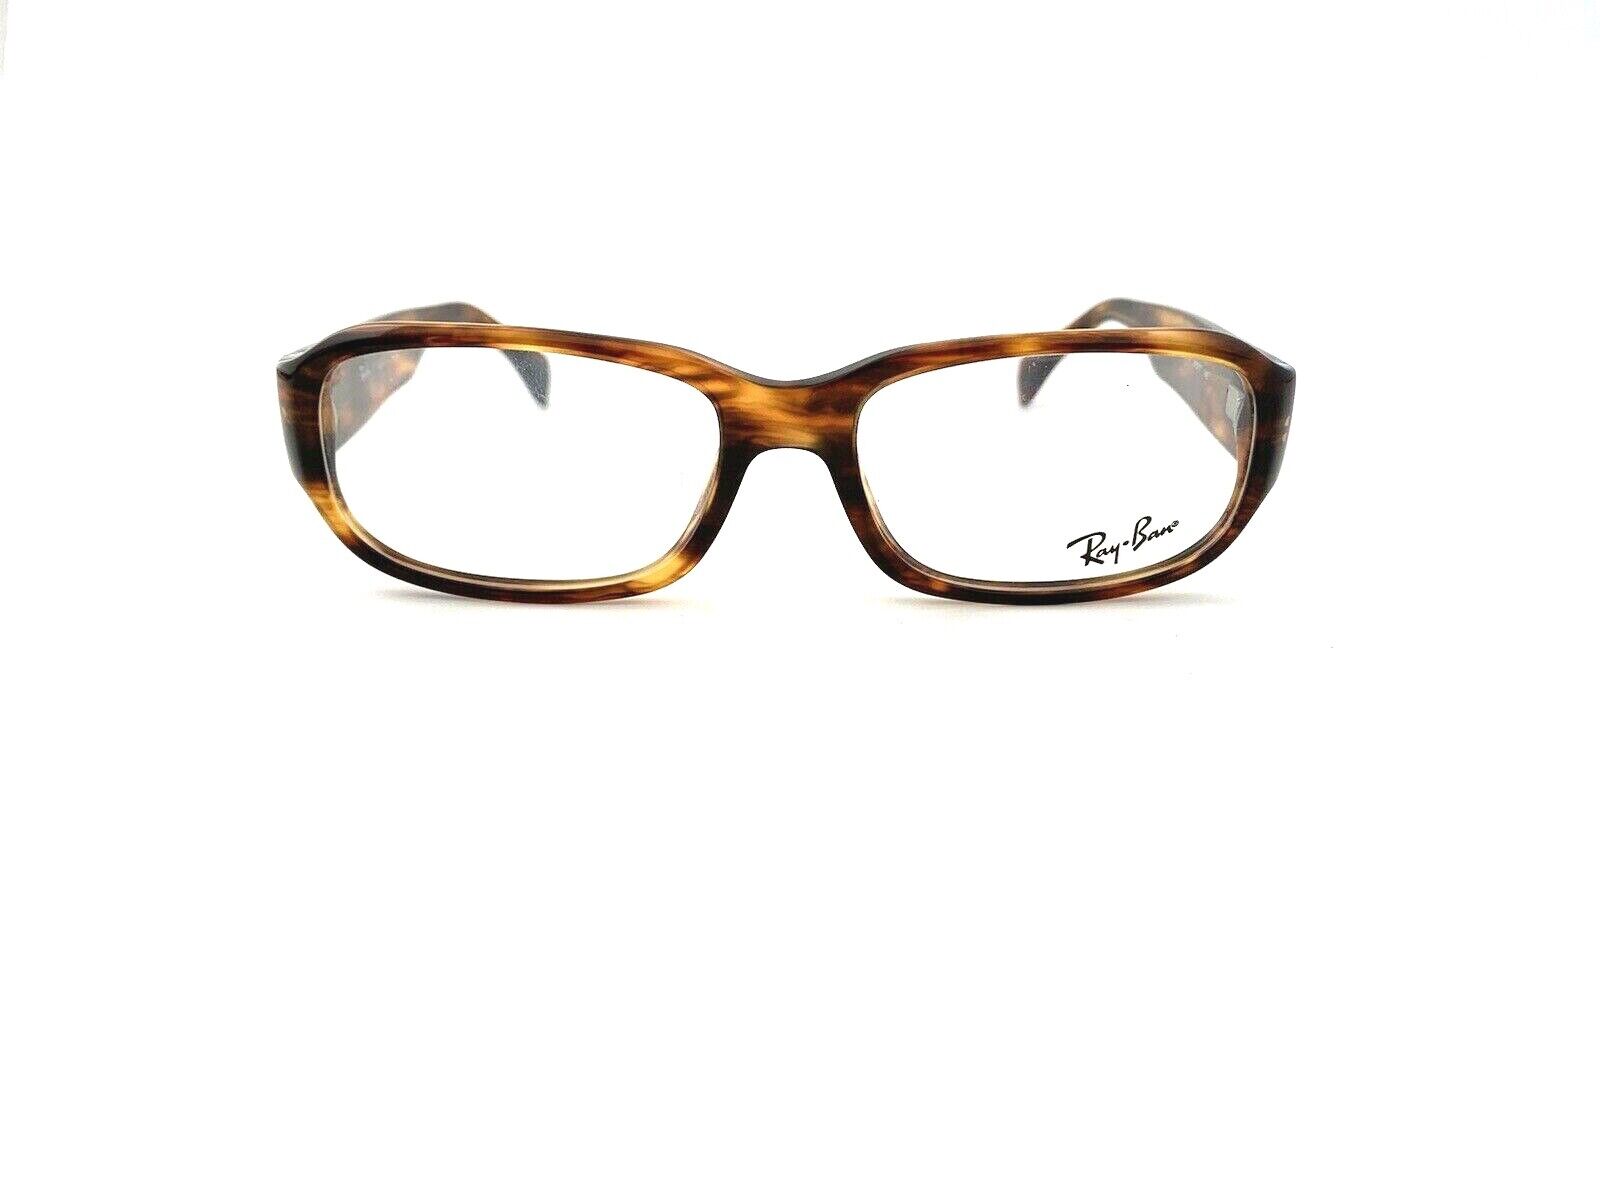 New Ray-Ban Frames Light Tortoise Unisex Rx Eyeglasses RB 5253 2144 54 17 140 Bogate w wartość